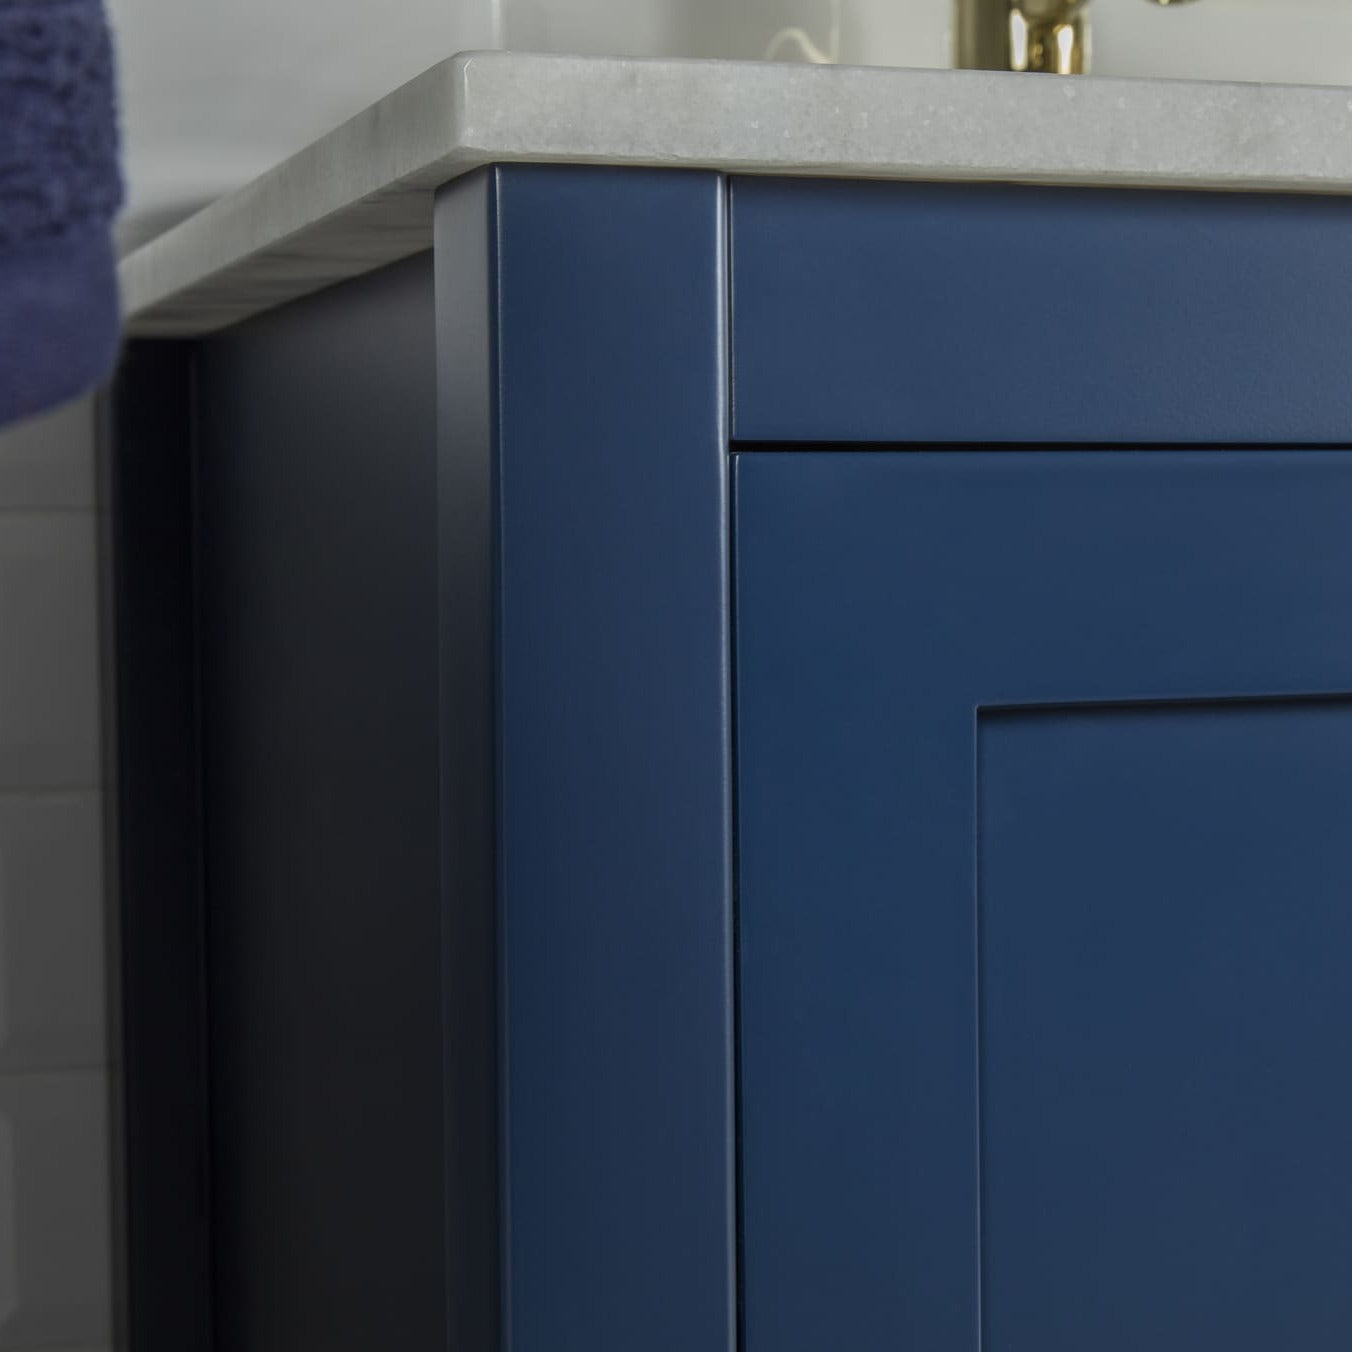 Ahley Bathroom Vanity Homelero 72"  #size_72"  #color_blue  #hardware_brass